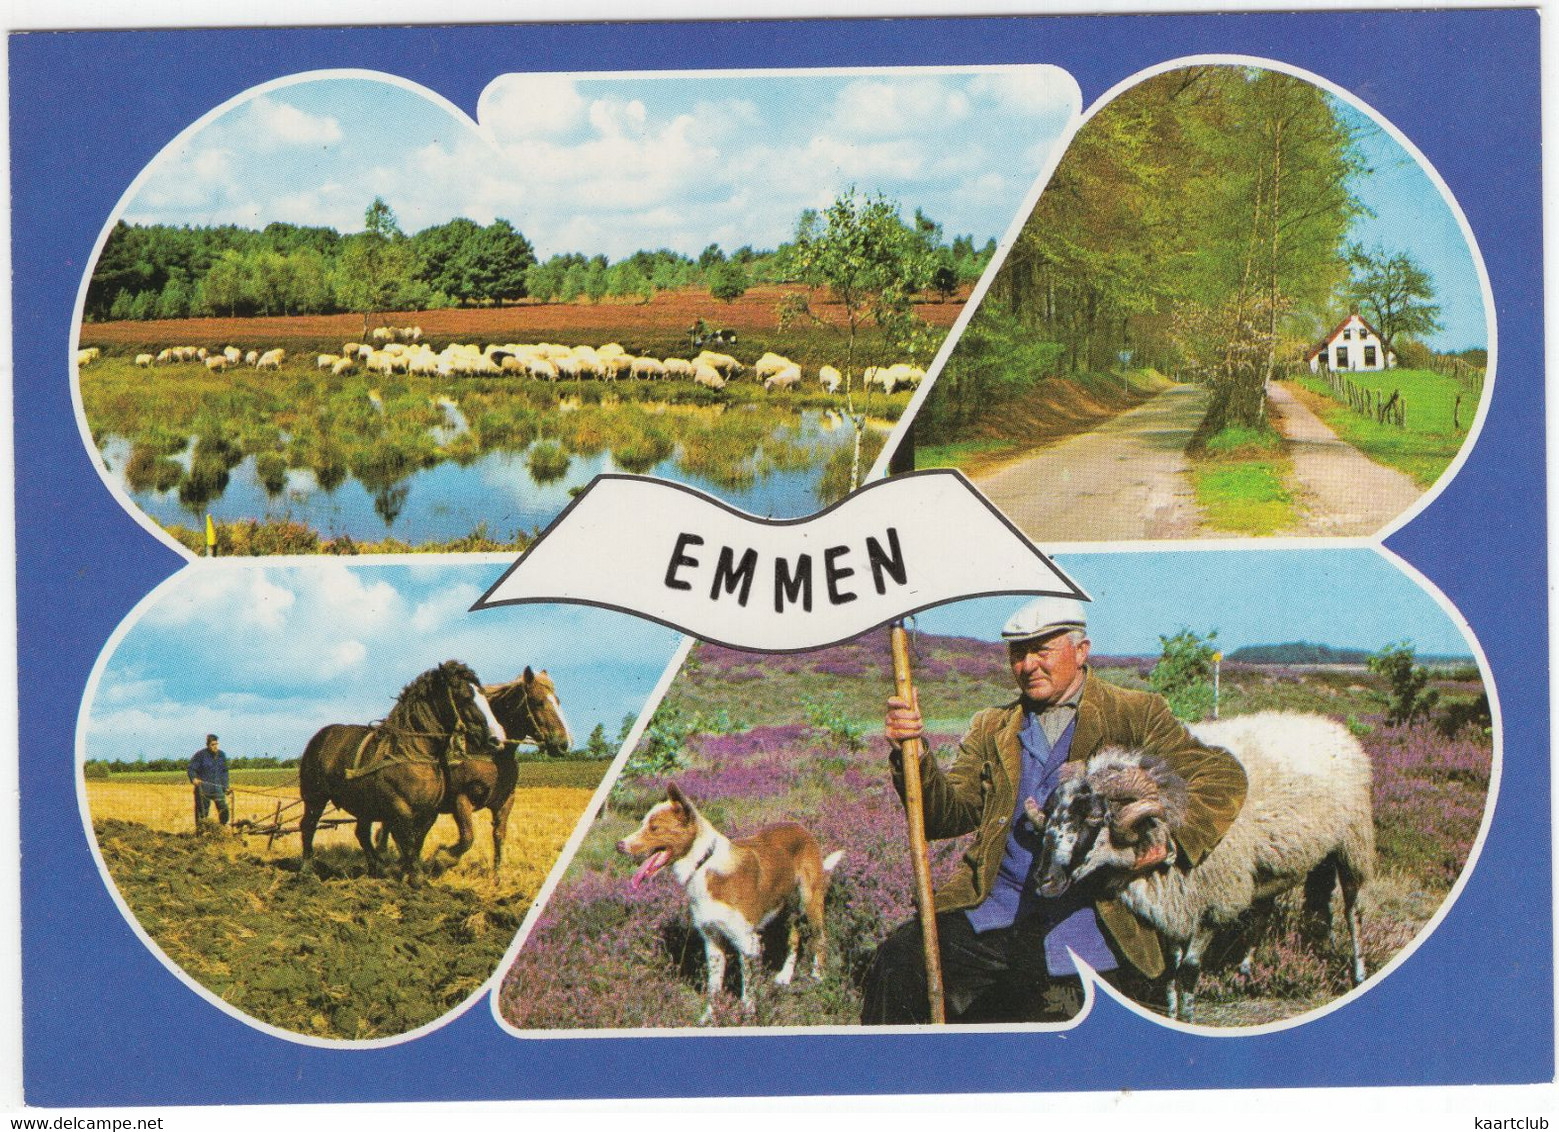 Emmen - Paarden Span, Hond, Heide, Bomen, Ram, Schapen, Boer, Boerderij - (Drenthe / Nederland) - L 4394S - Emmen